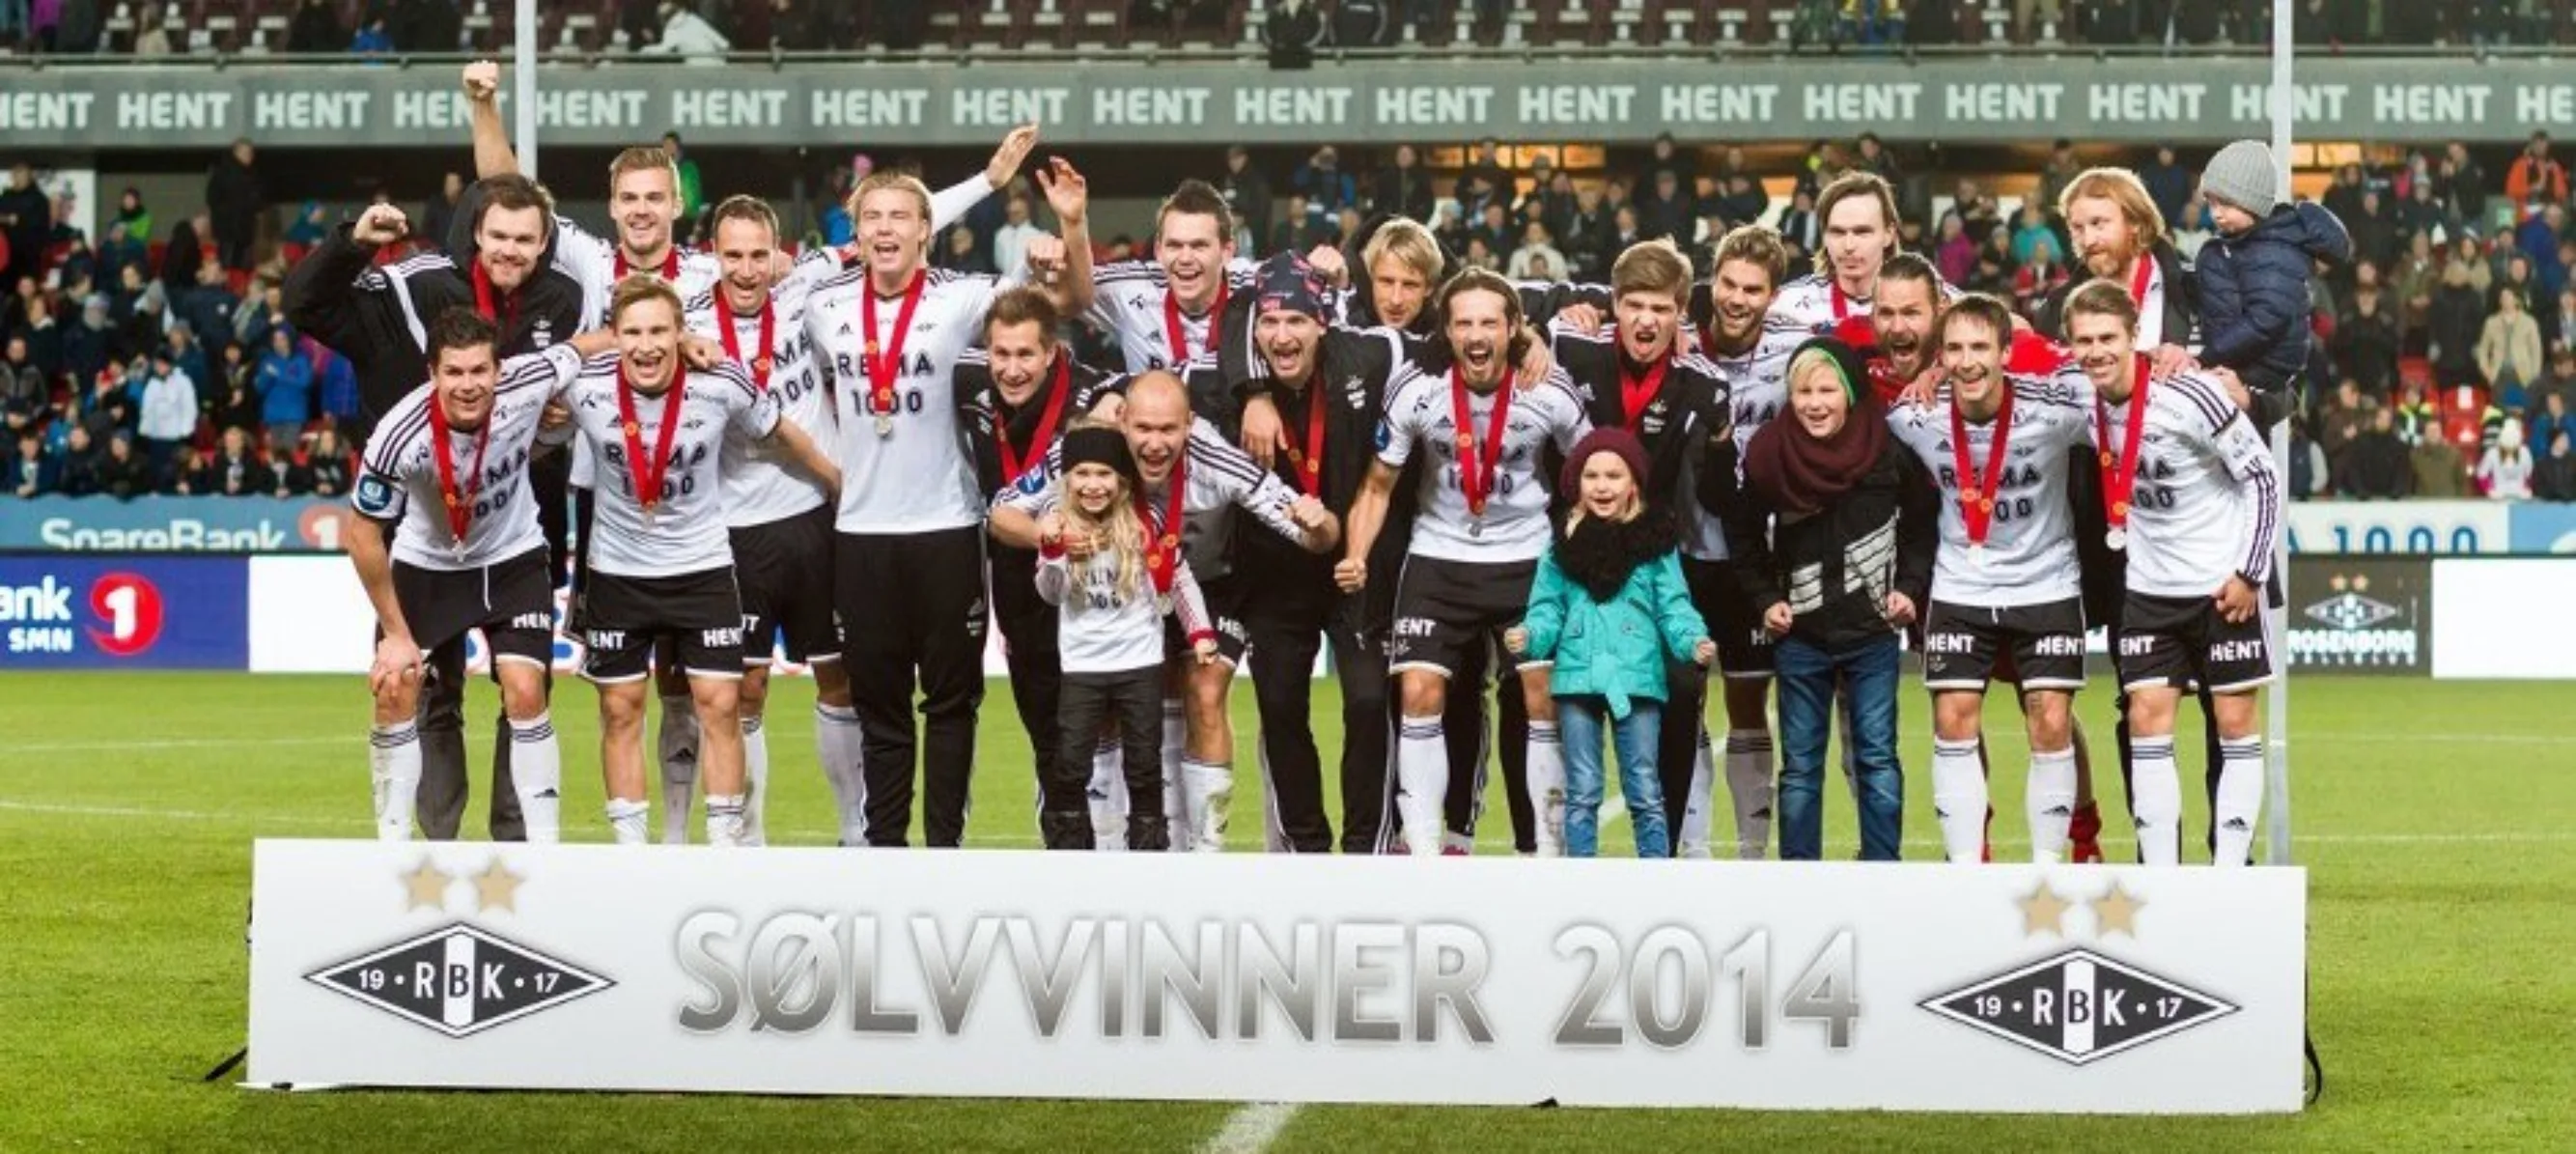 Rosenborg stromsgodset solvkampen 2014 fzigrw9r8pzn1ljrqinqnx27o